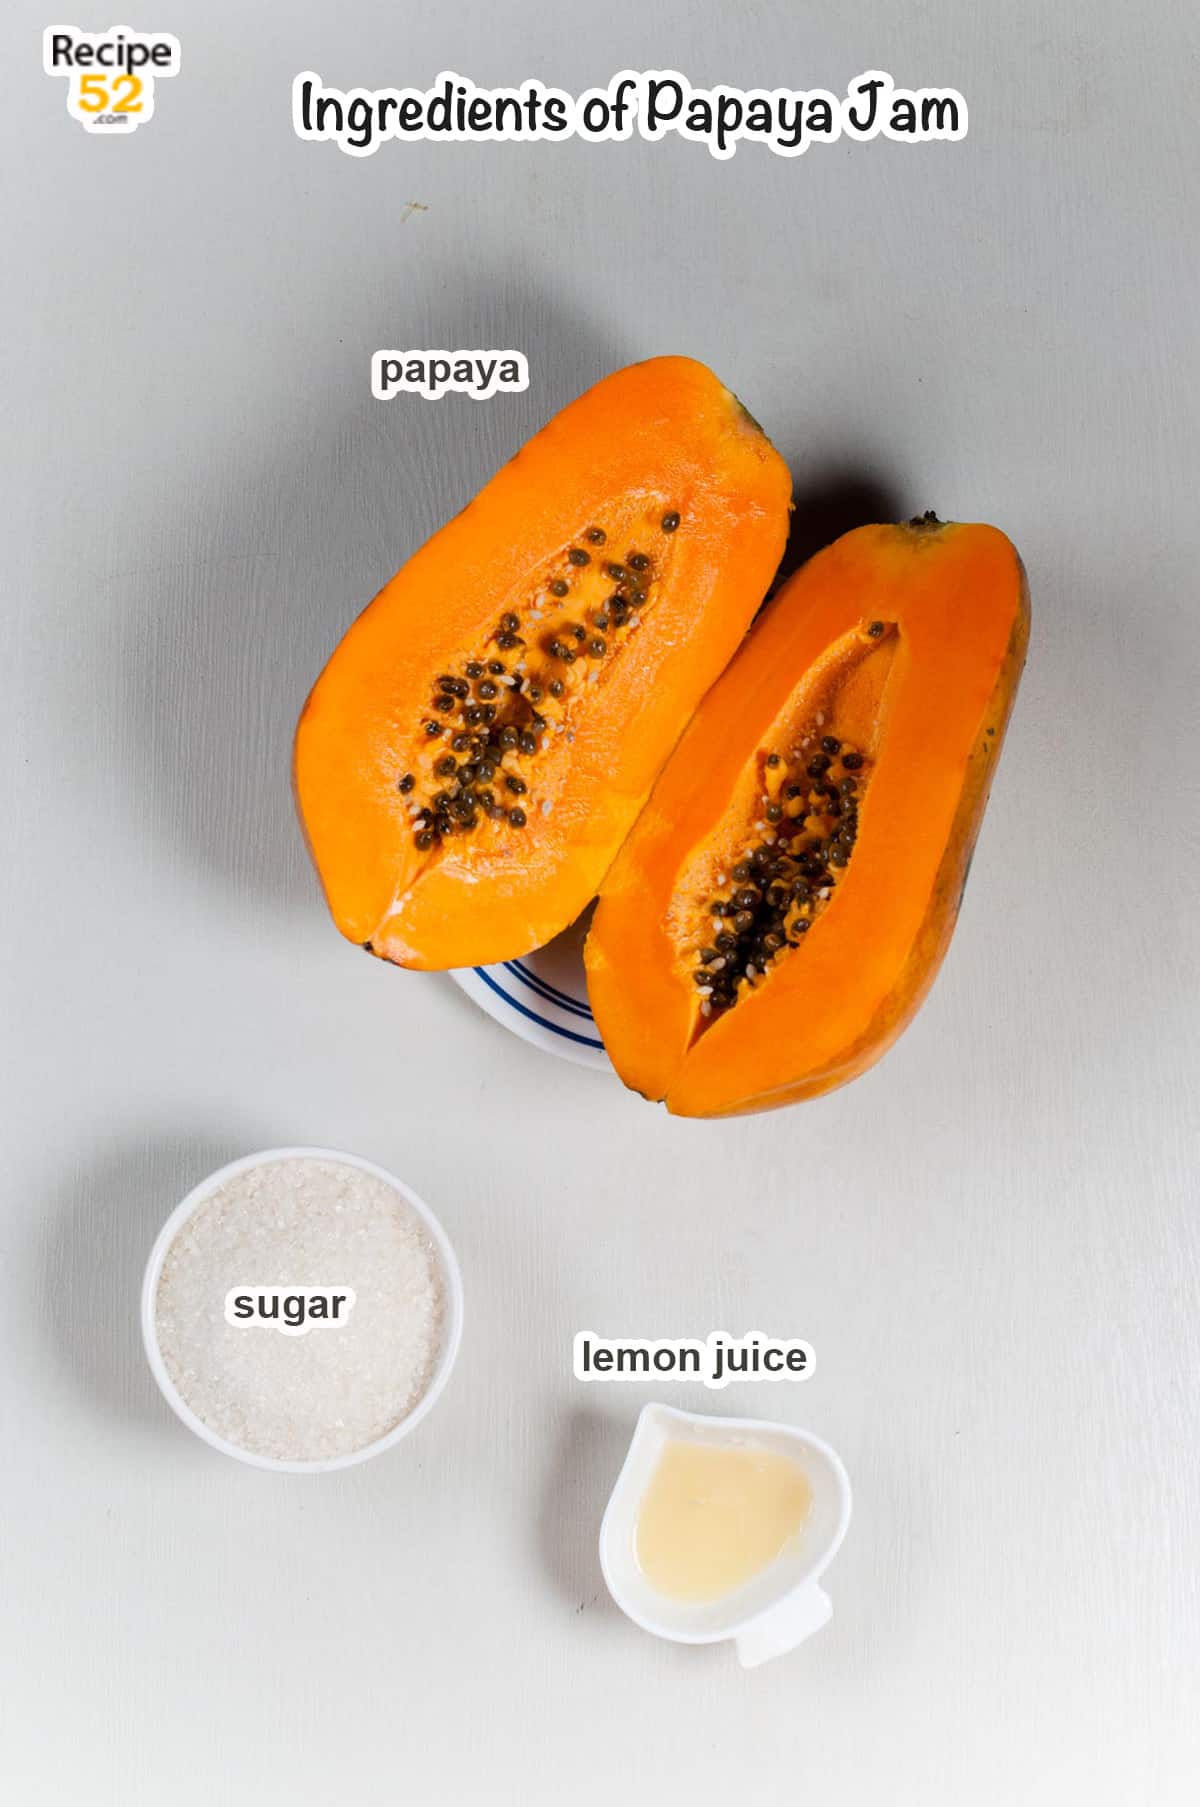 papaya, sugar and lemon juice